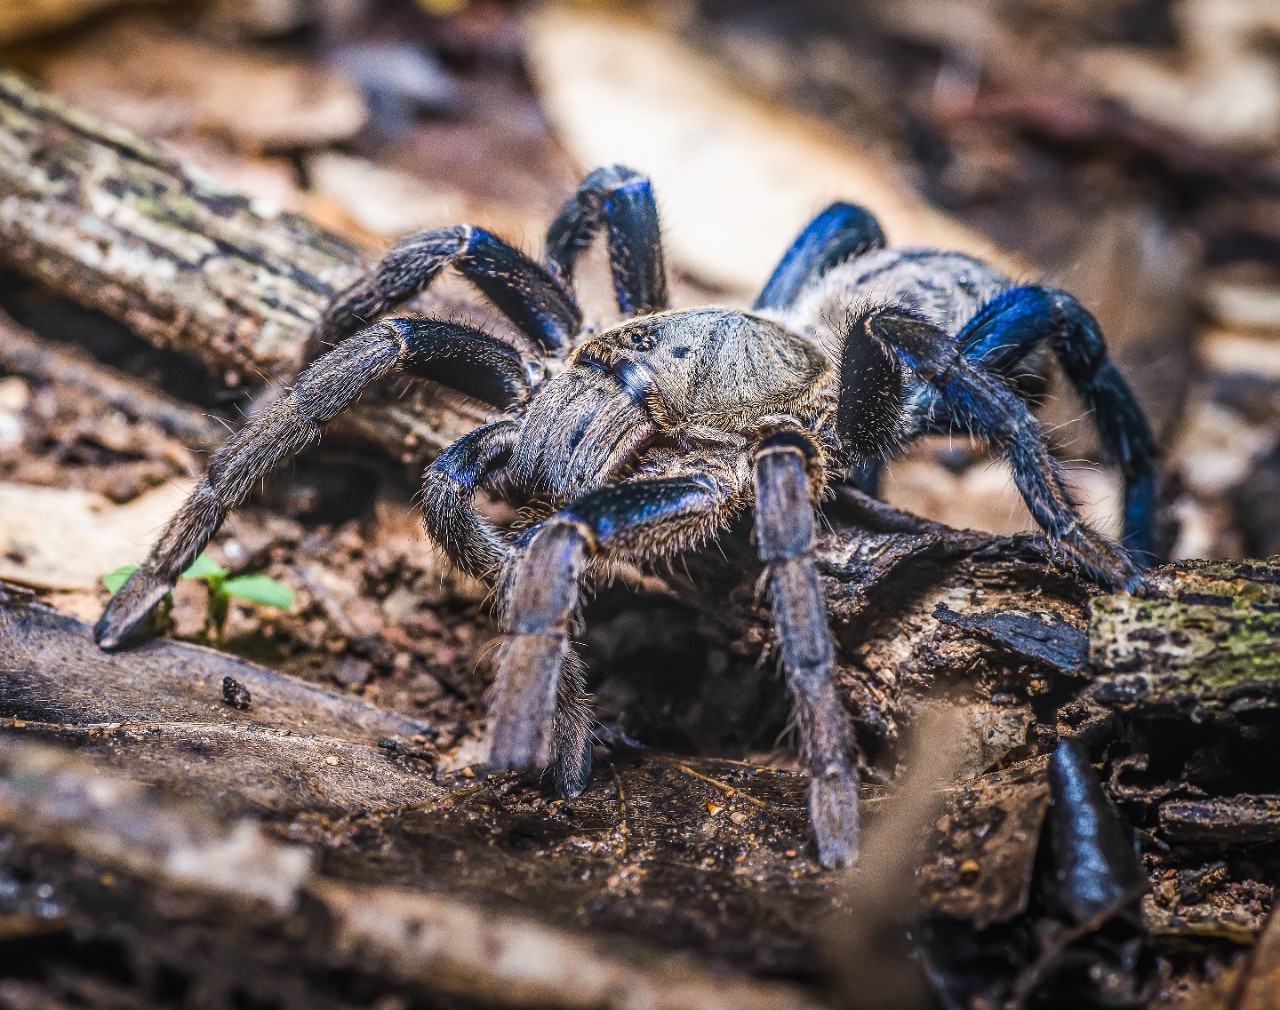 A tarantula with blue legs.